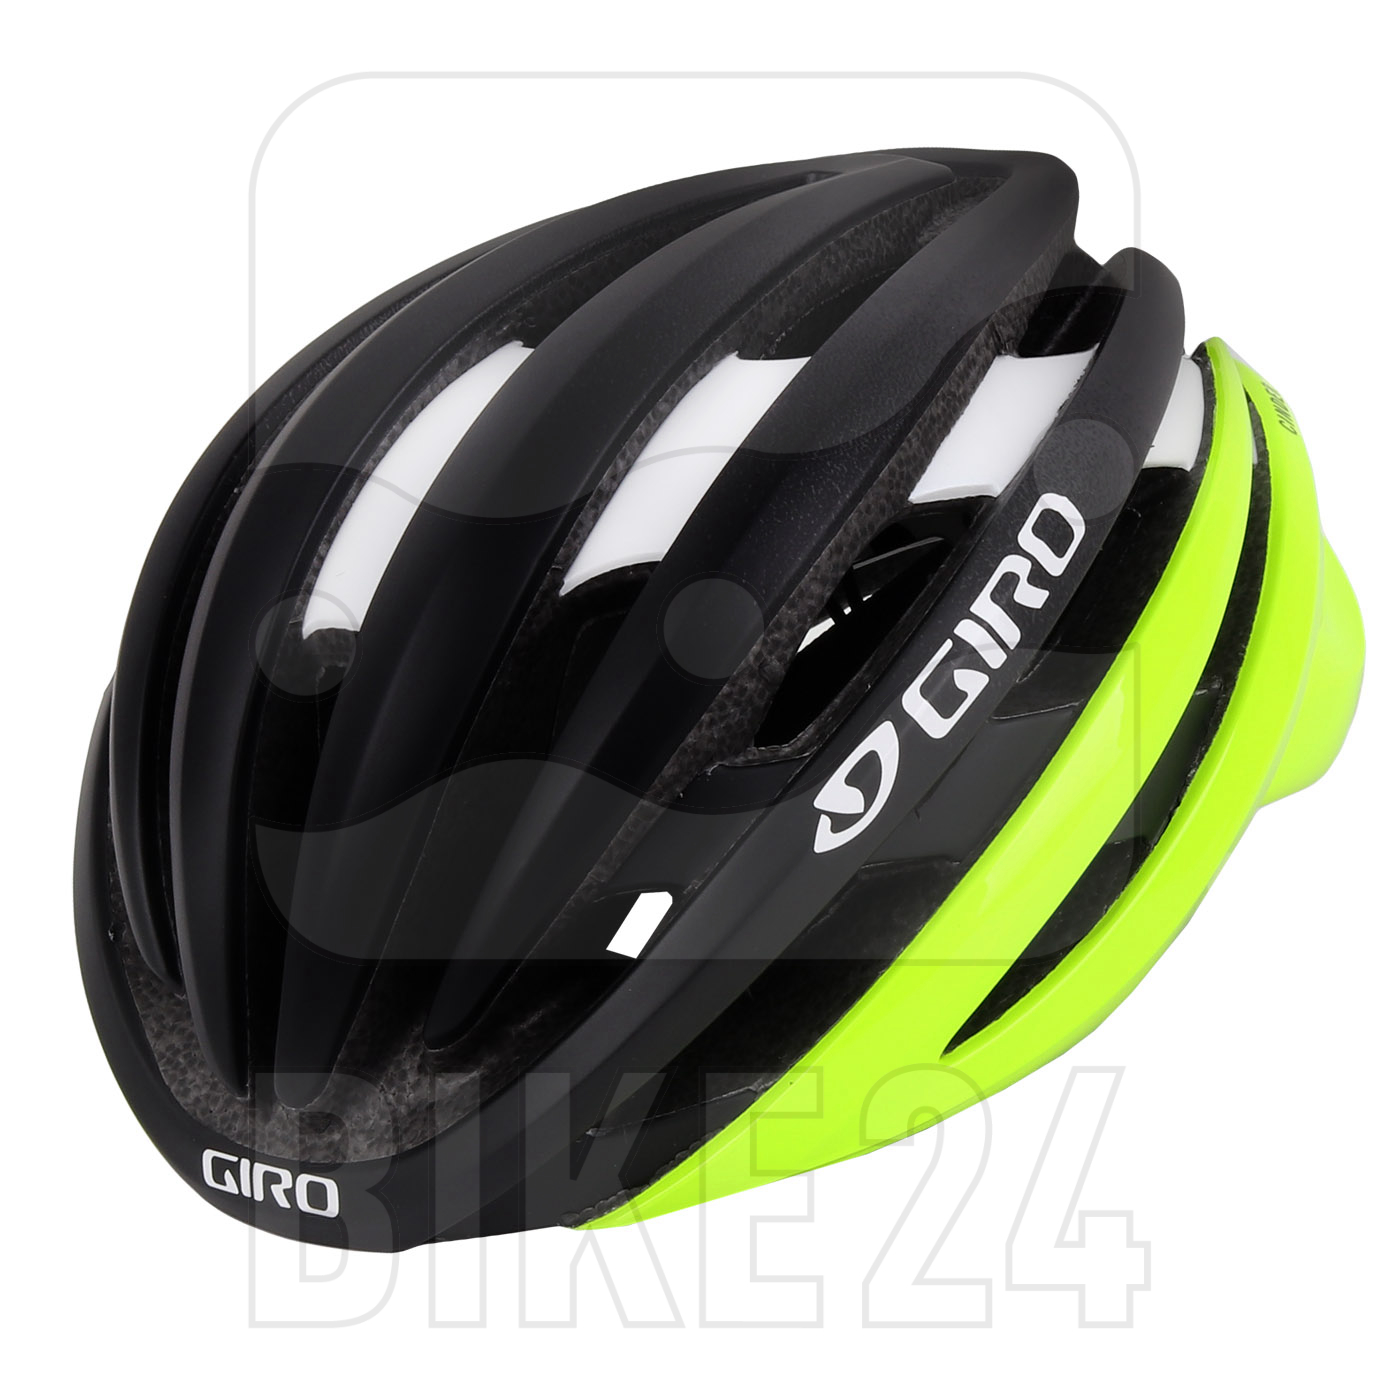 Produktbild von Giro Cinder MIPS Helm - matte black fade / highlight yellow